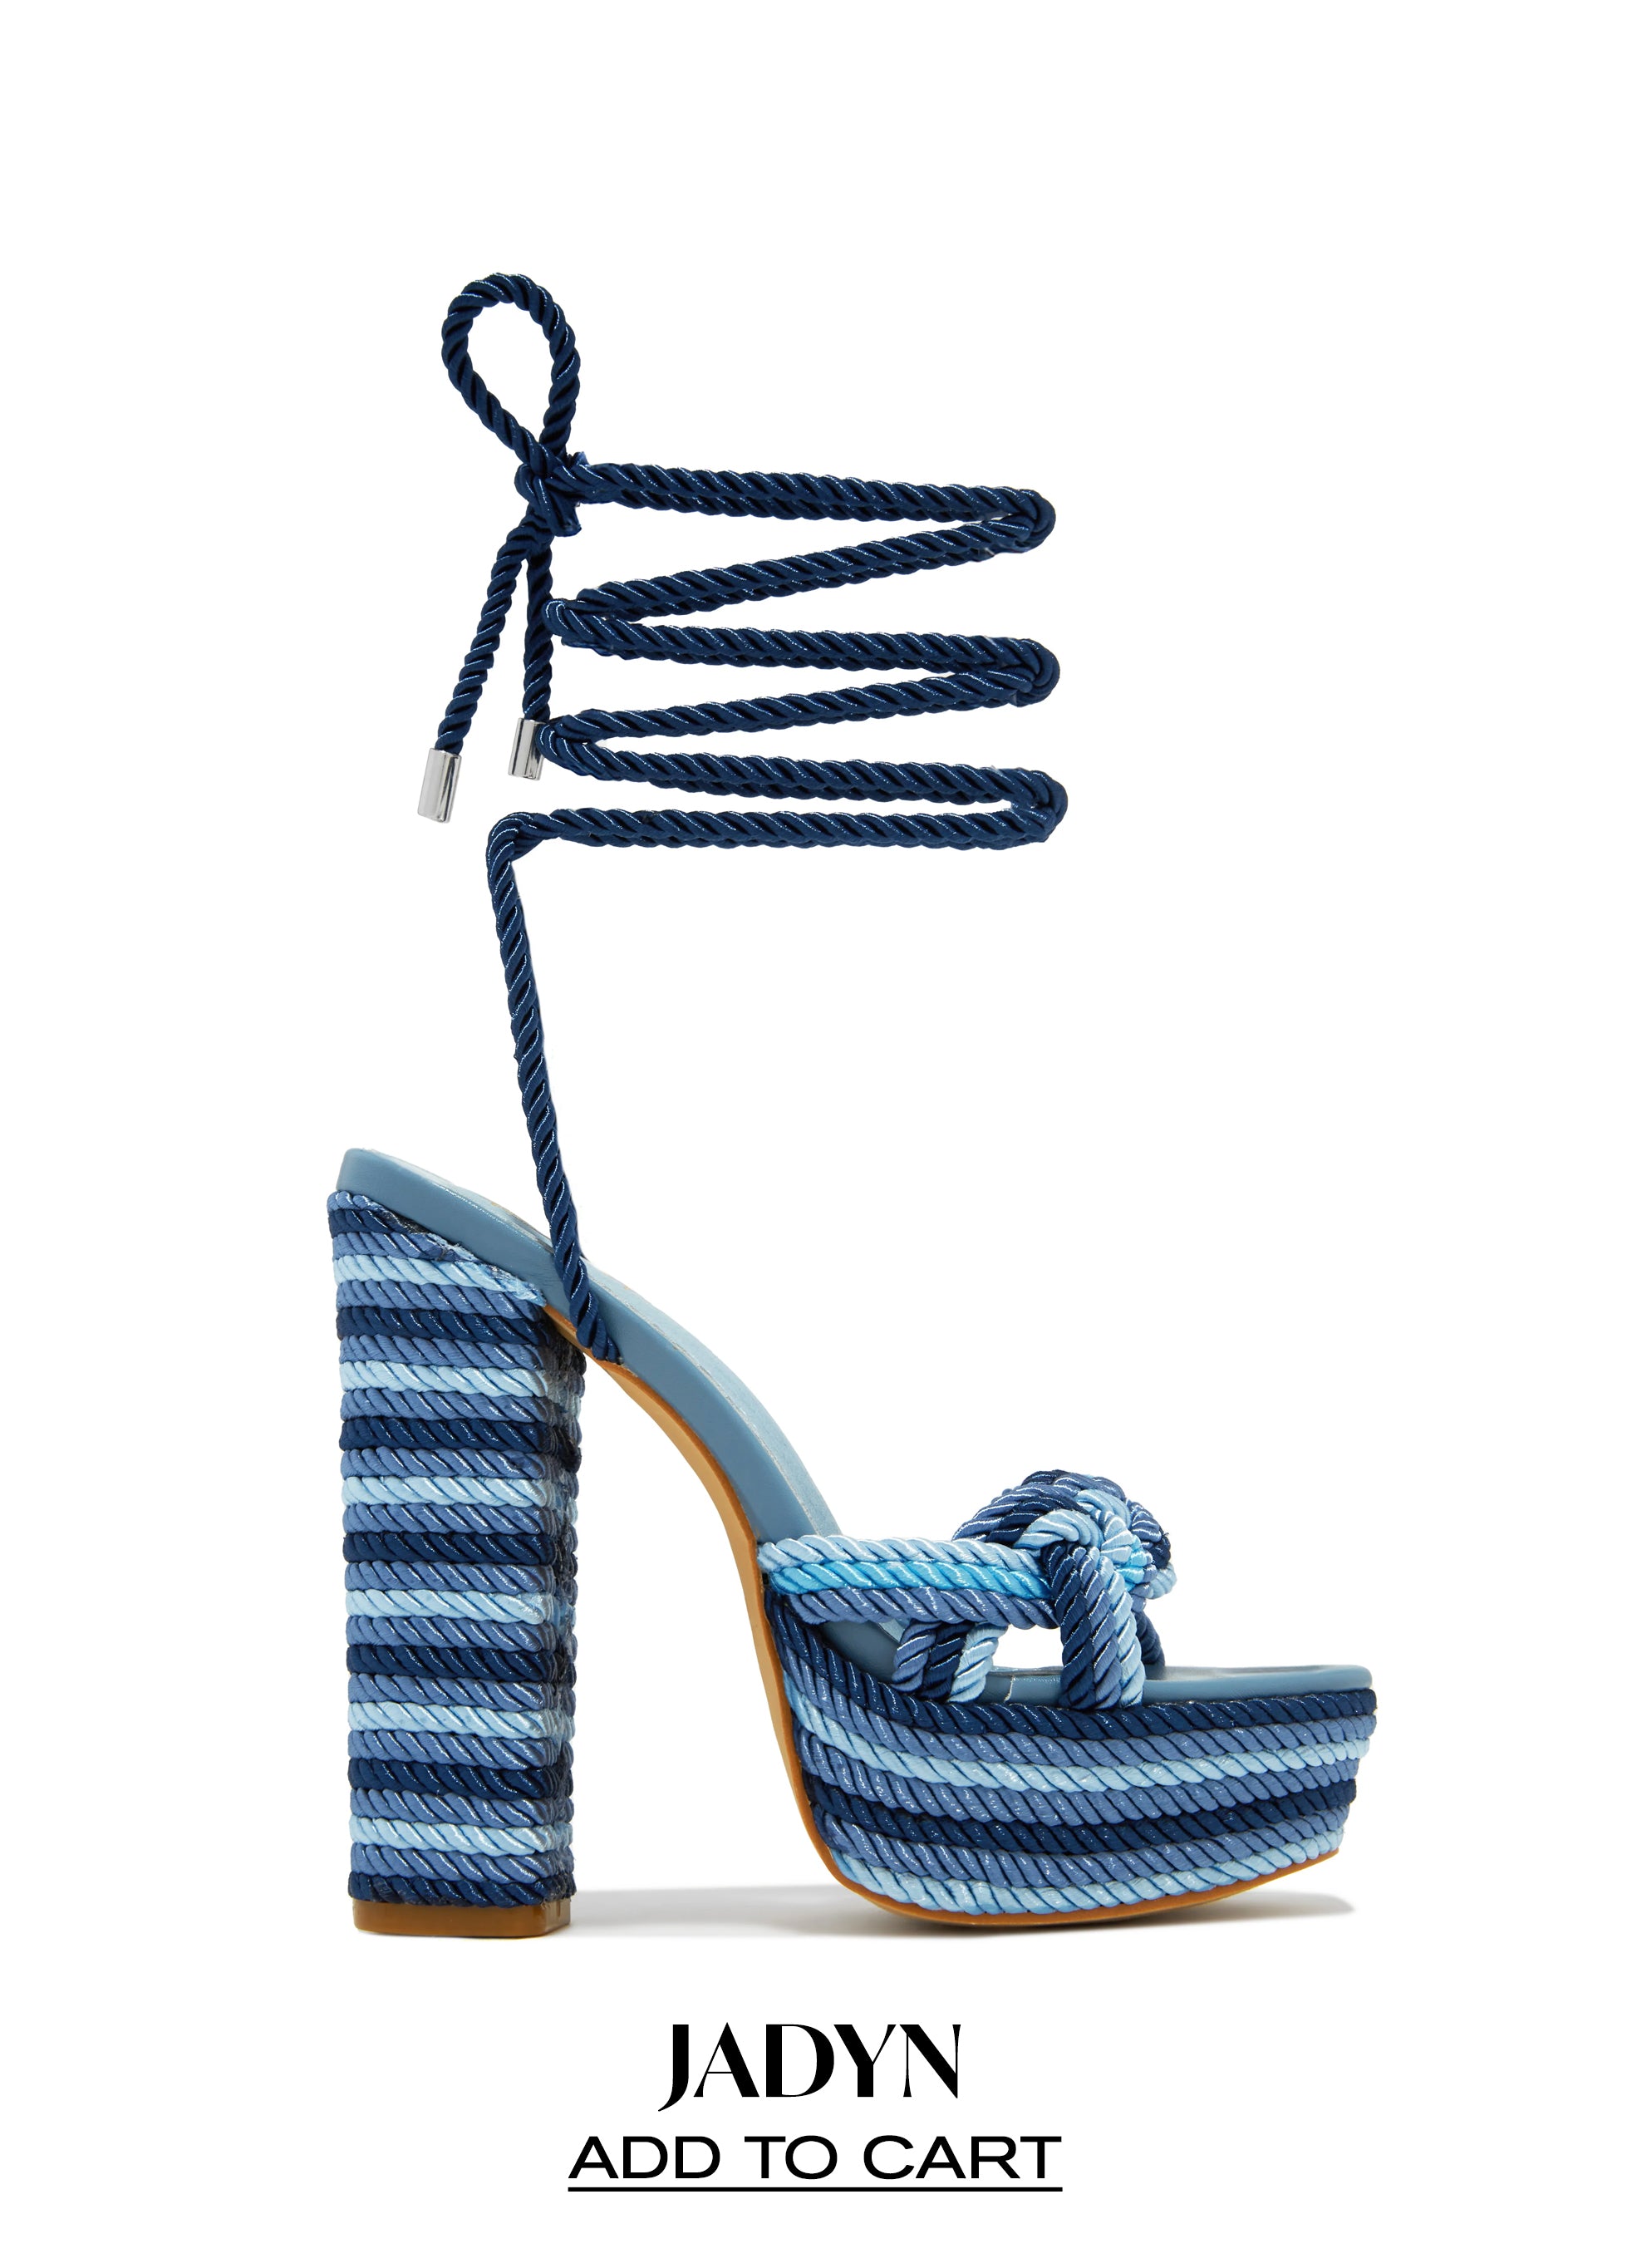 MISS LOLA, MISSLOLA.COM on Instagram: Your NEW fave heels 😍🔥👑